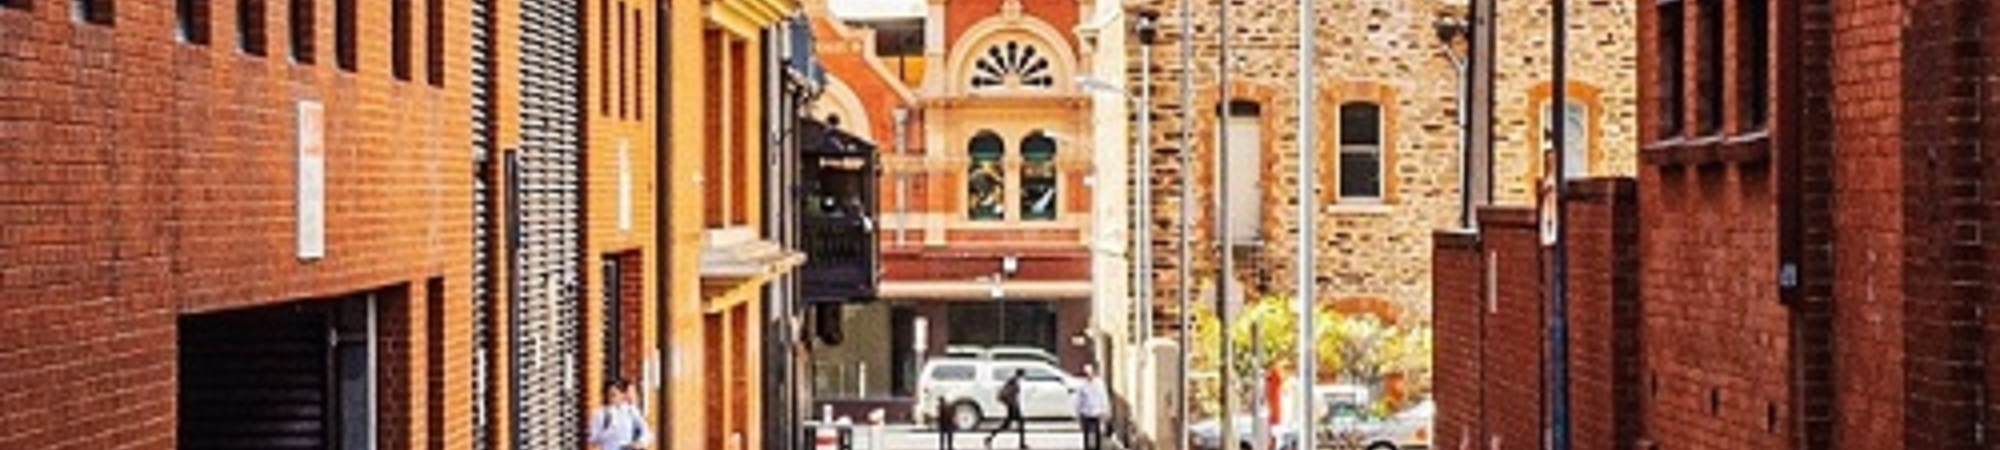 North Street Adelaide Rawkkim